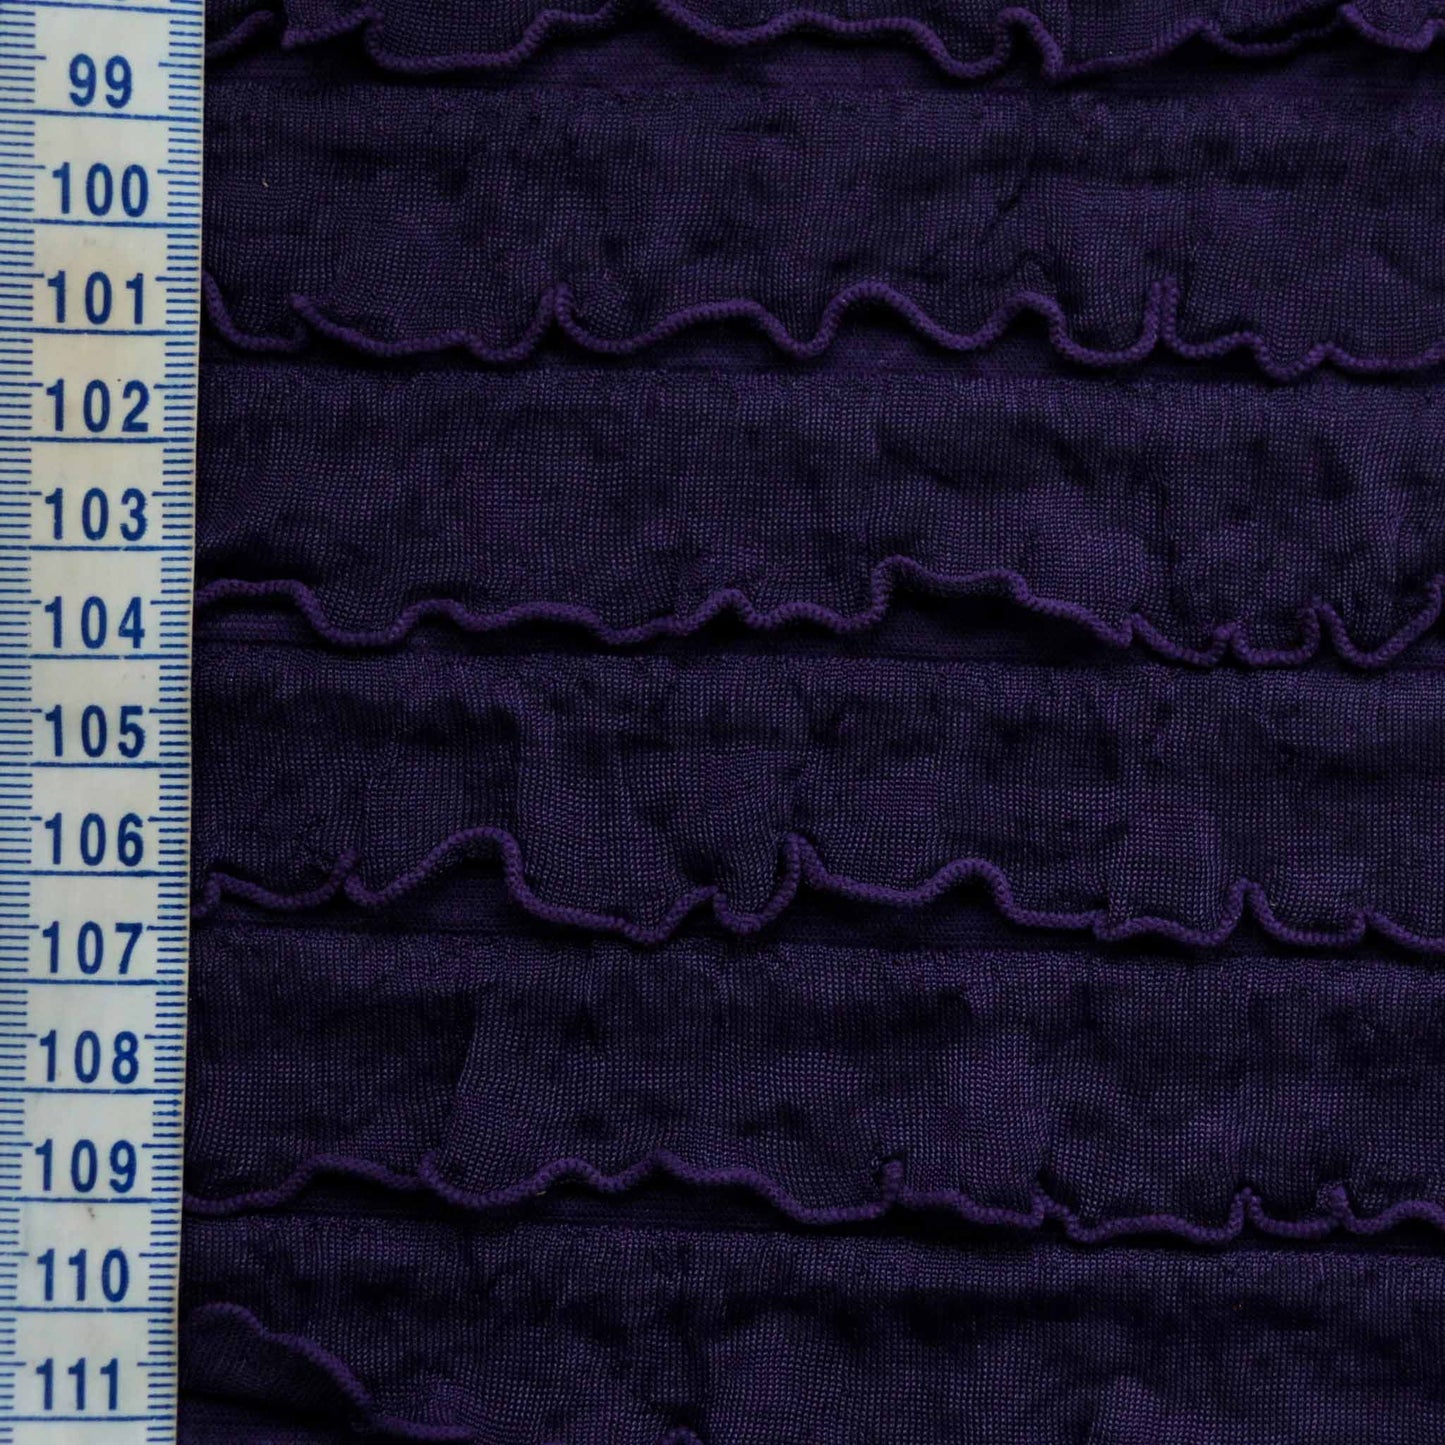 metre frilly ruffle rara dressmaking stretchy fabric in purple